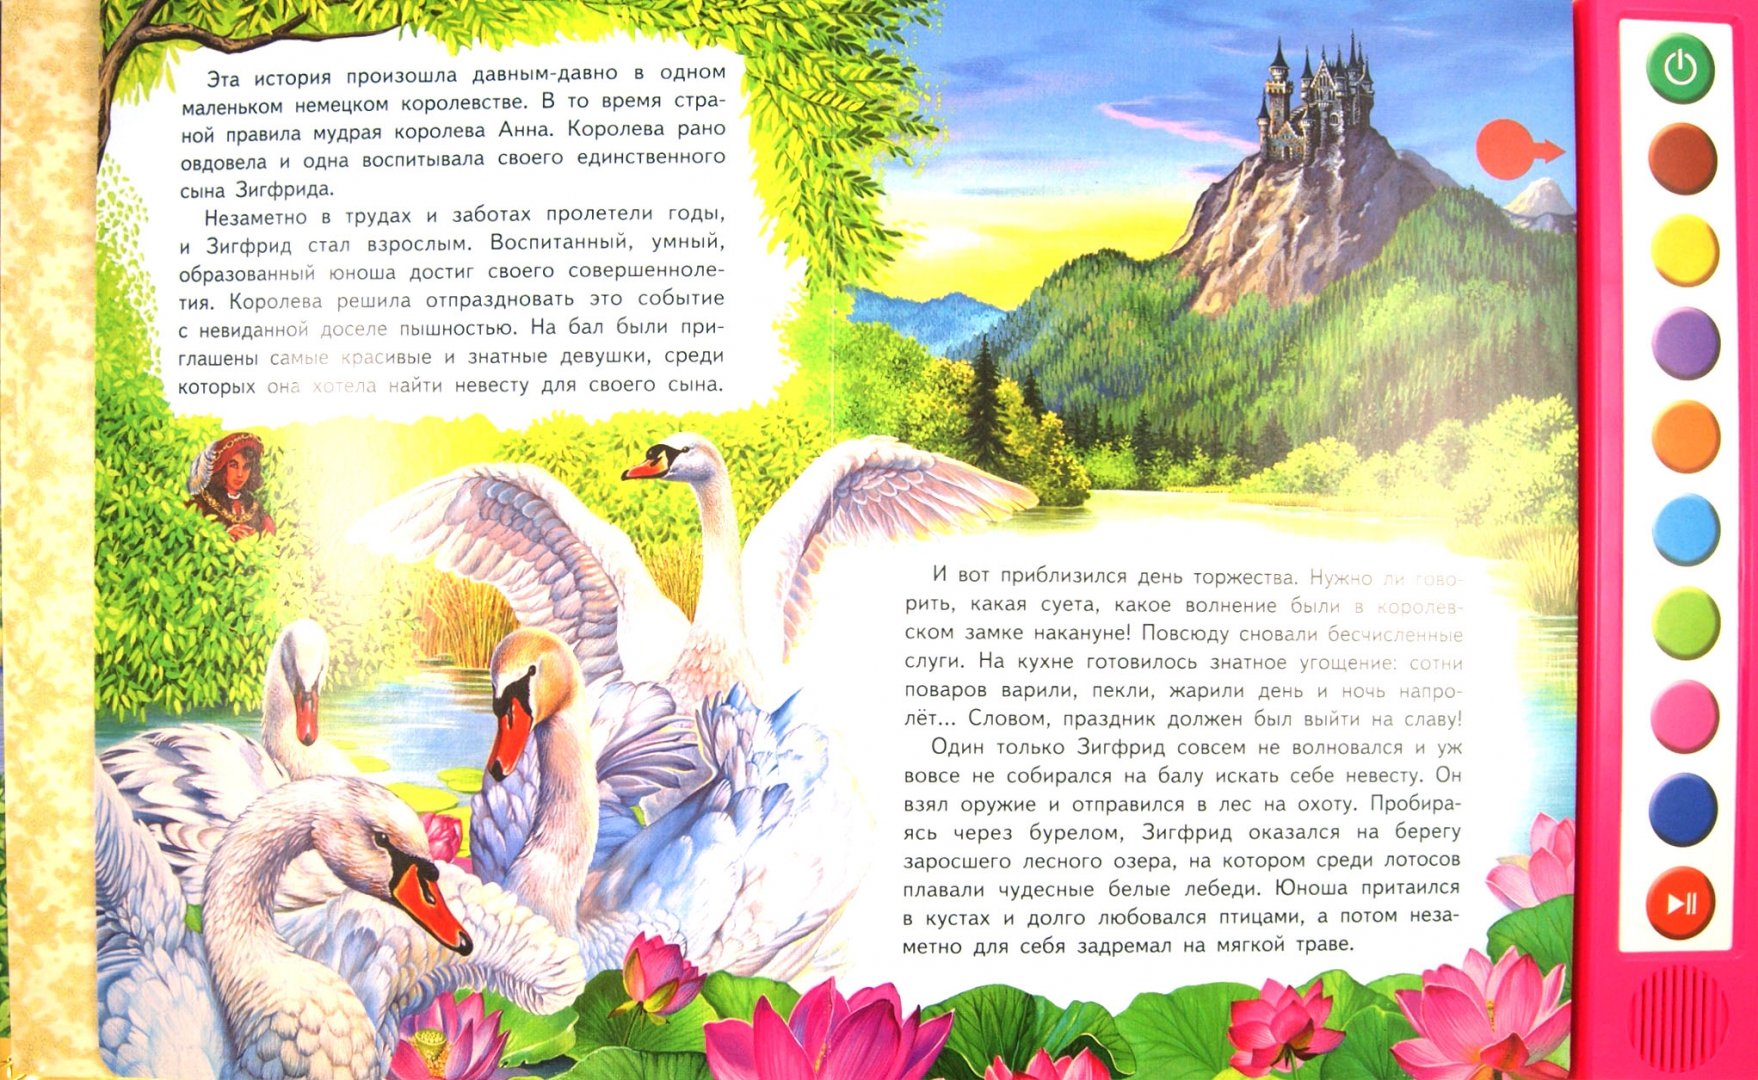 Лебединое озеро книга. Лебединое озеро сказка. Лебединое озеро обложка книги. Иллюстрации к книгам Лебединое озеро.